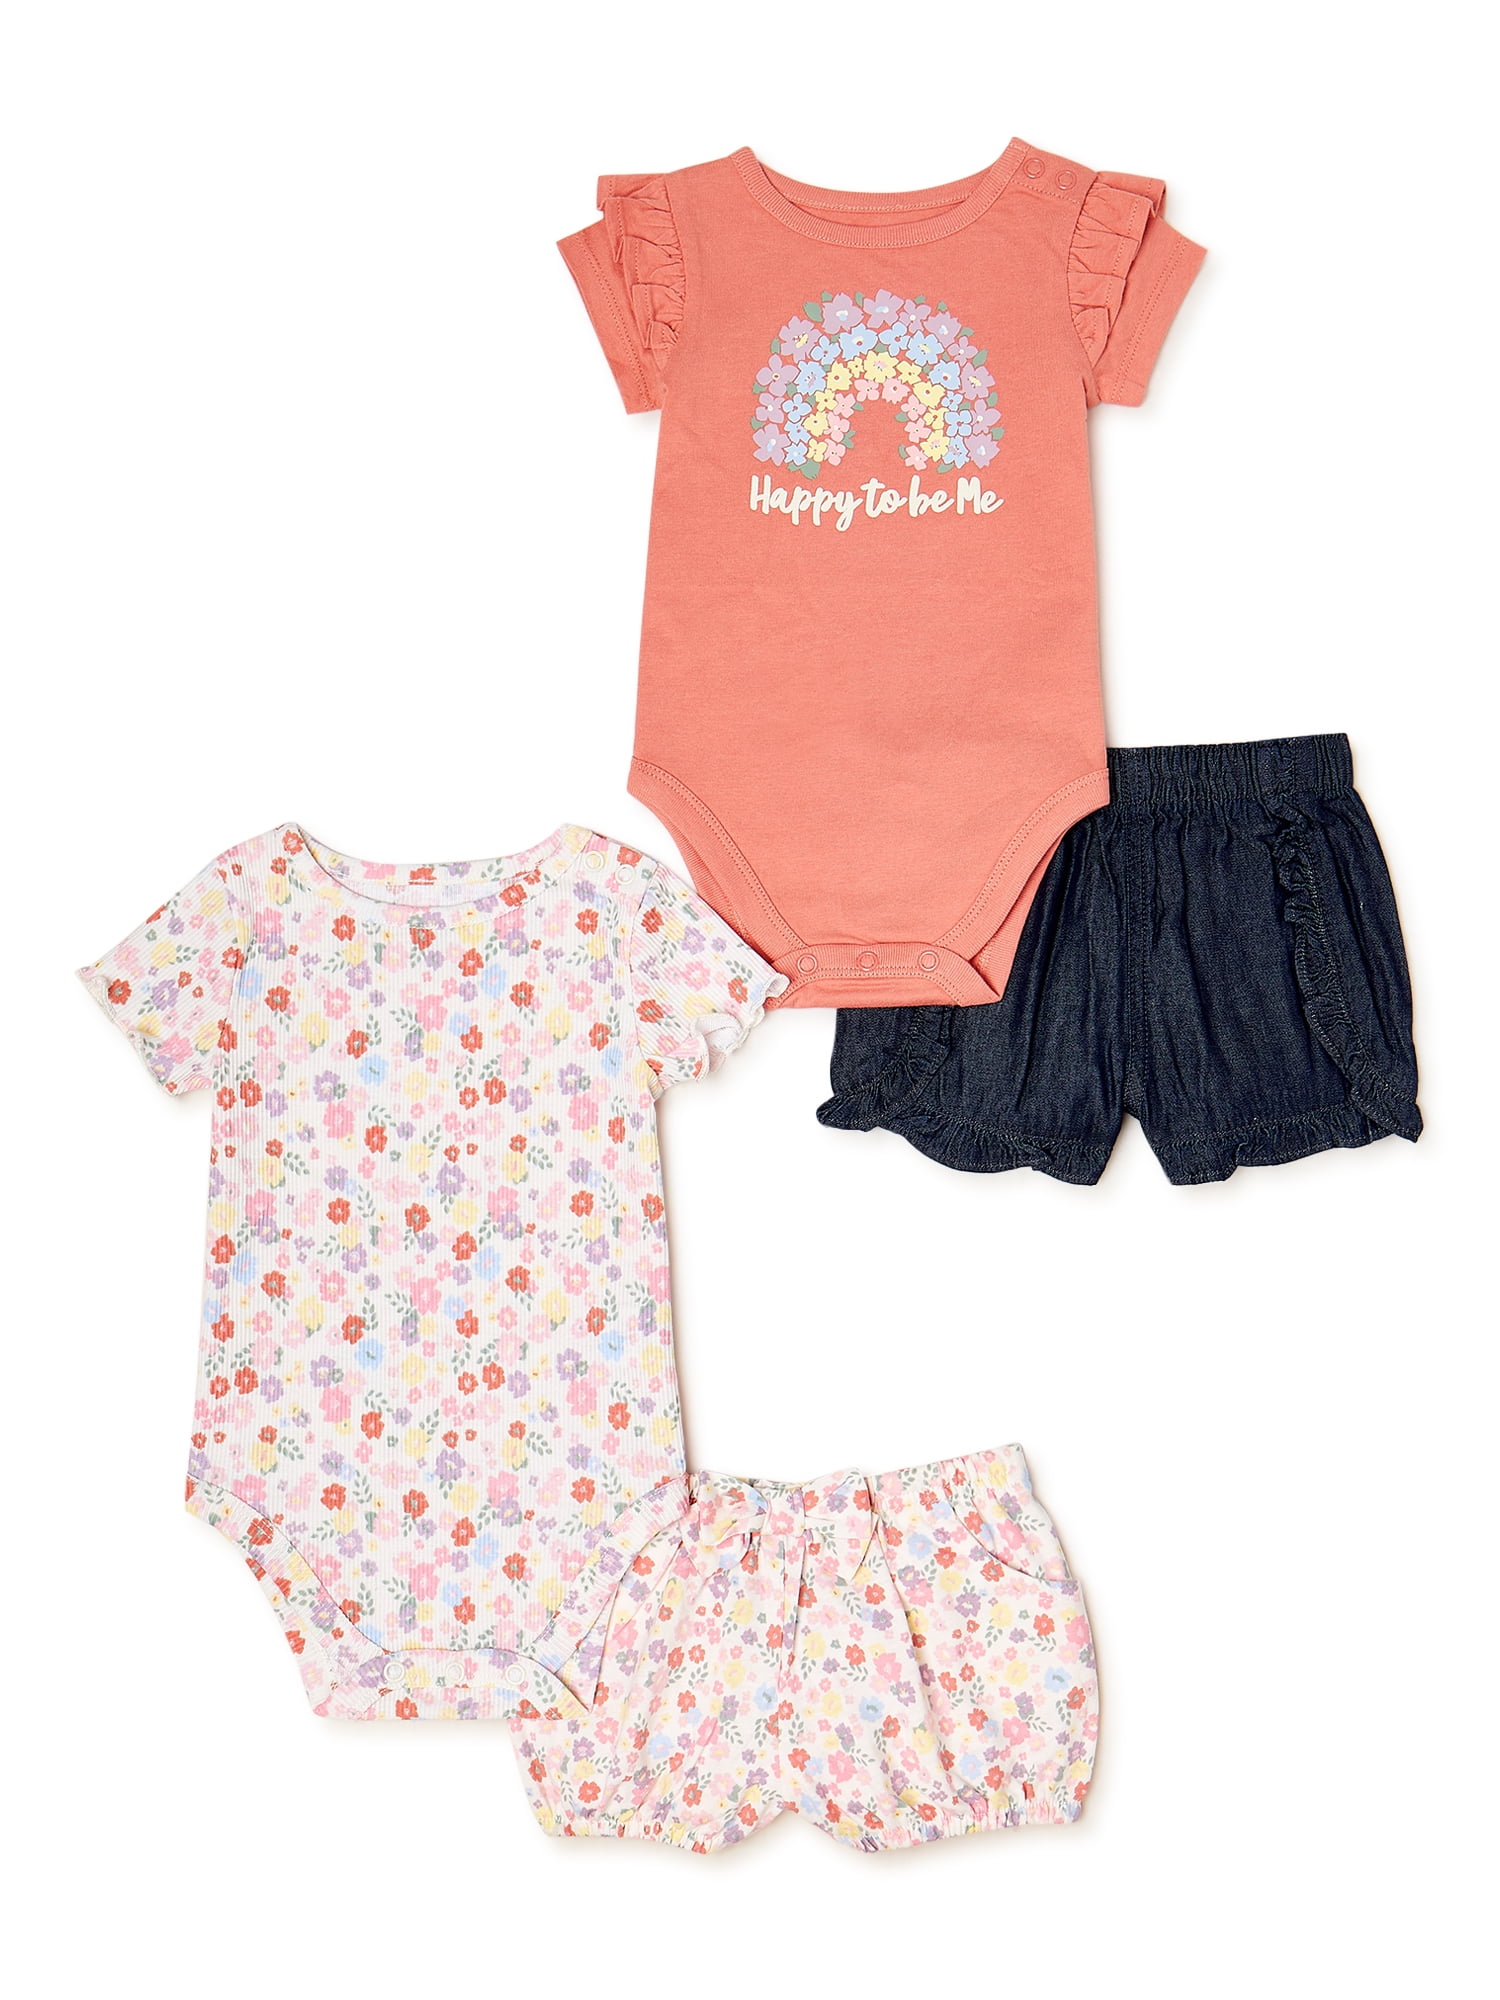 Toddler Baby Girls Bodysuit Short-Sleeve Onesie Boxing Cartoon Print Outfit Spring Pajamas